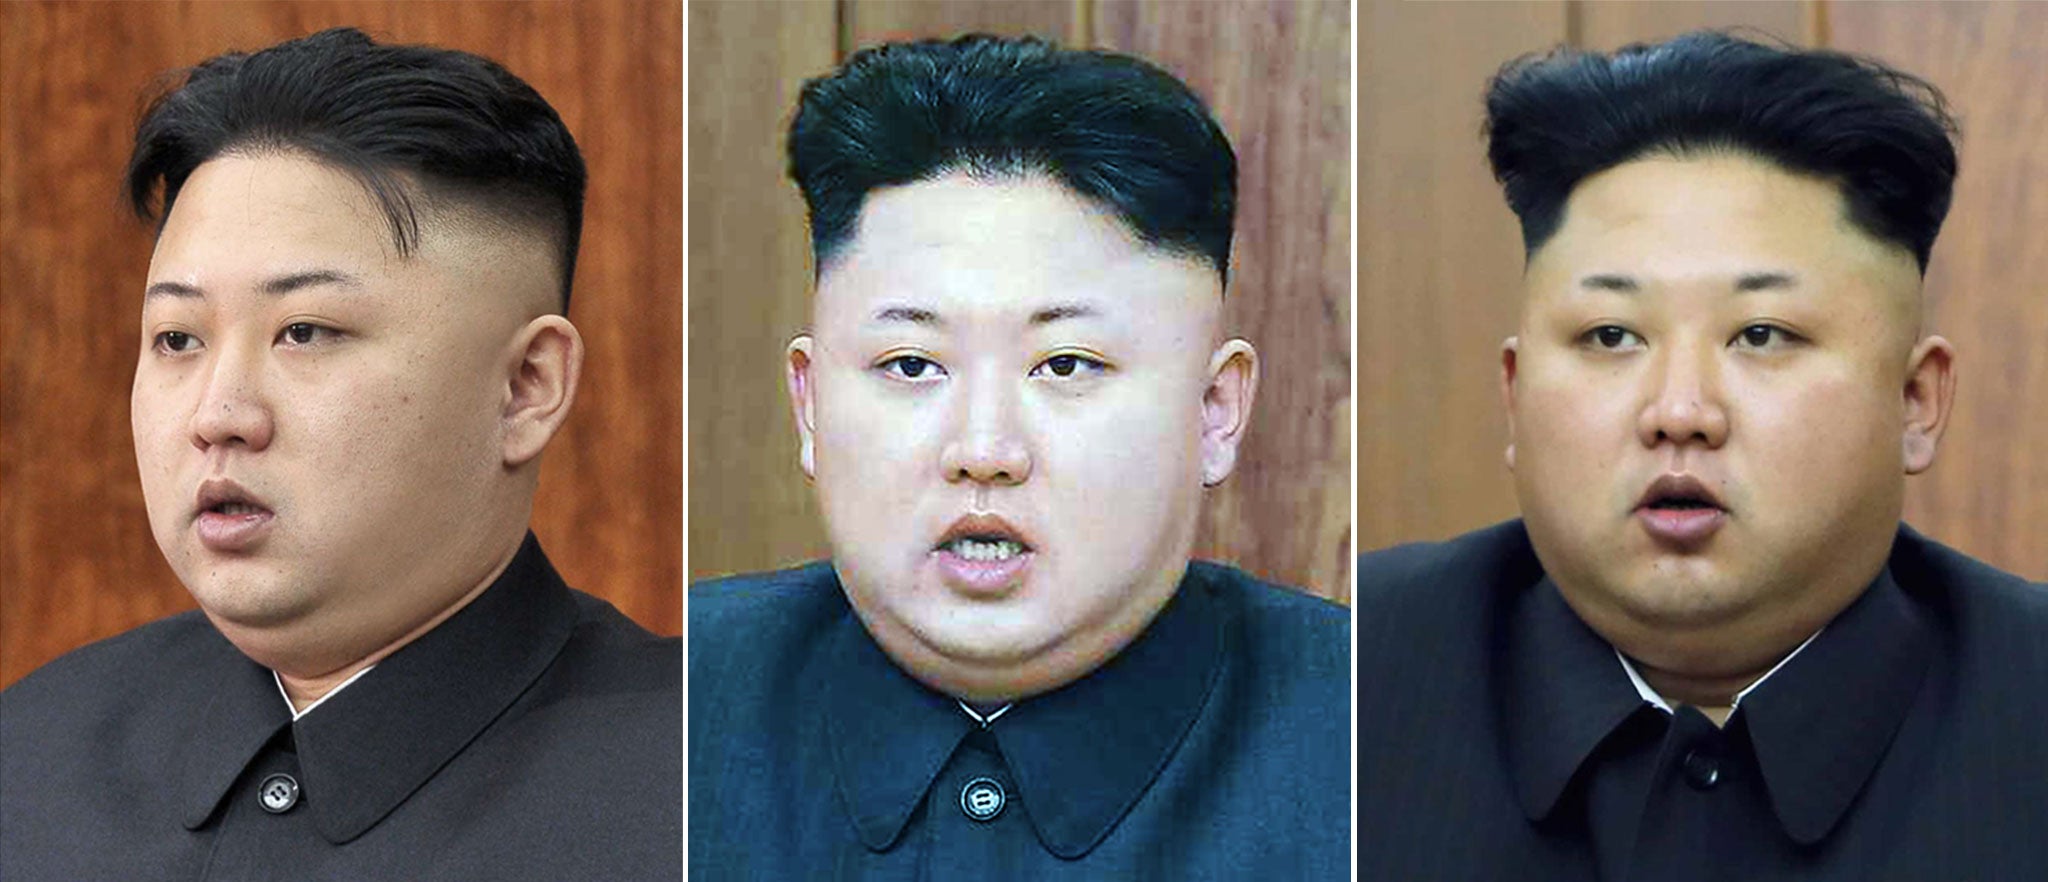 North Korean dictator Kim Jong Un gets the Photoshop treatment